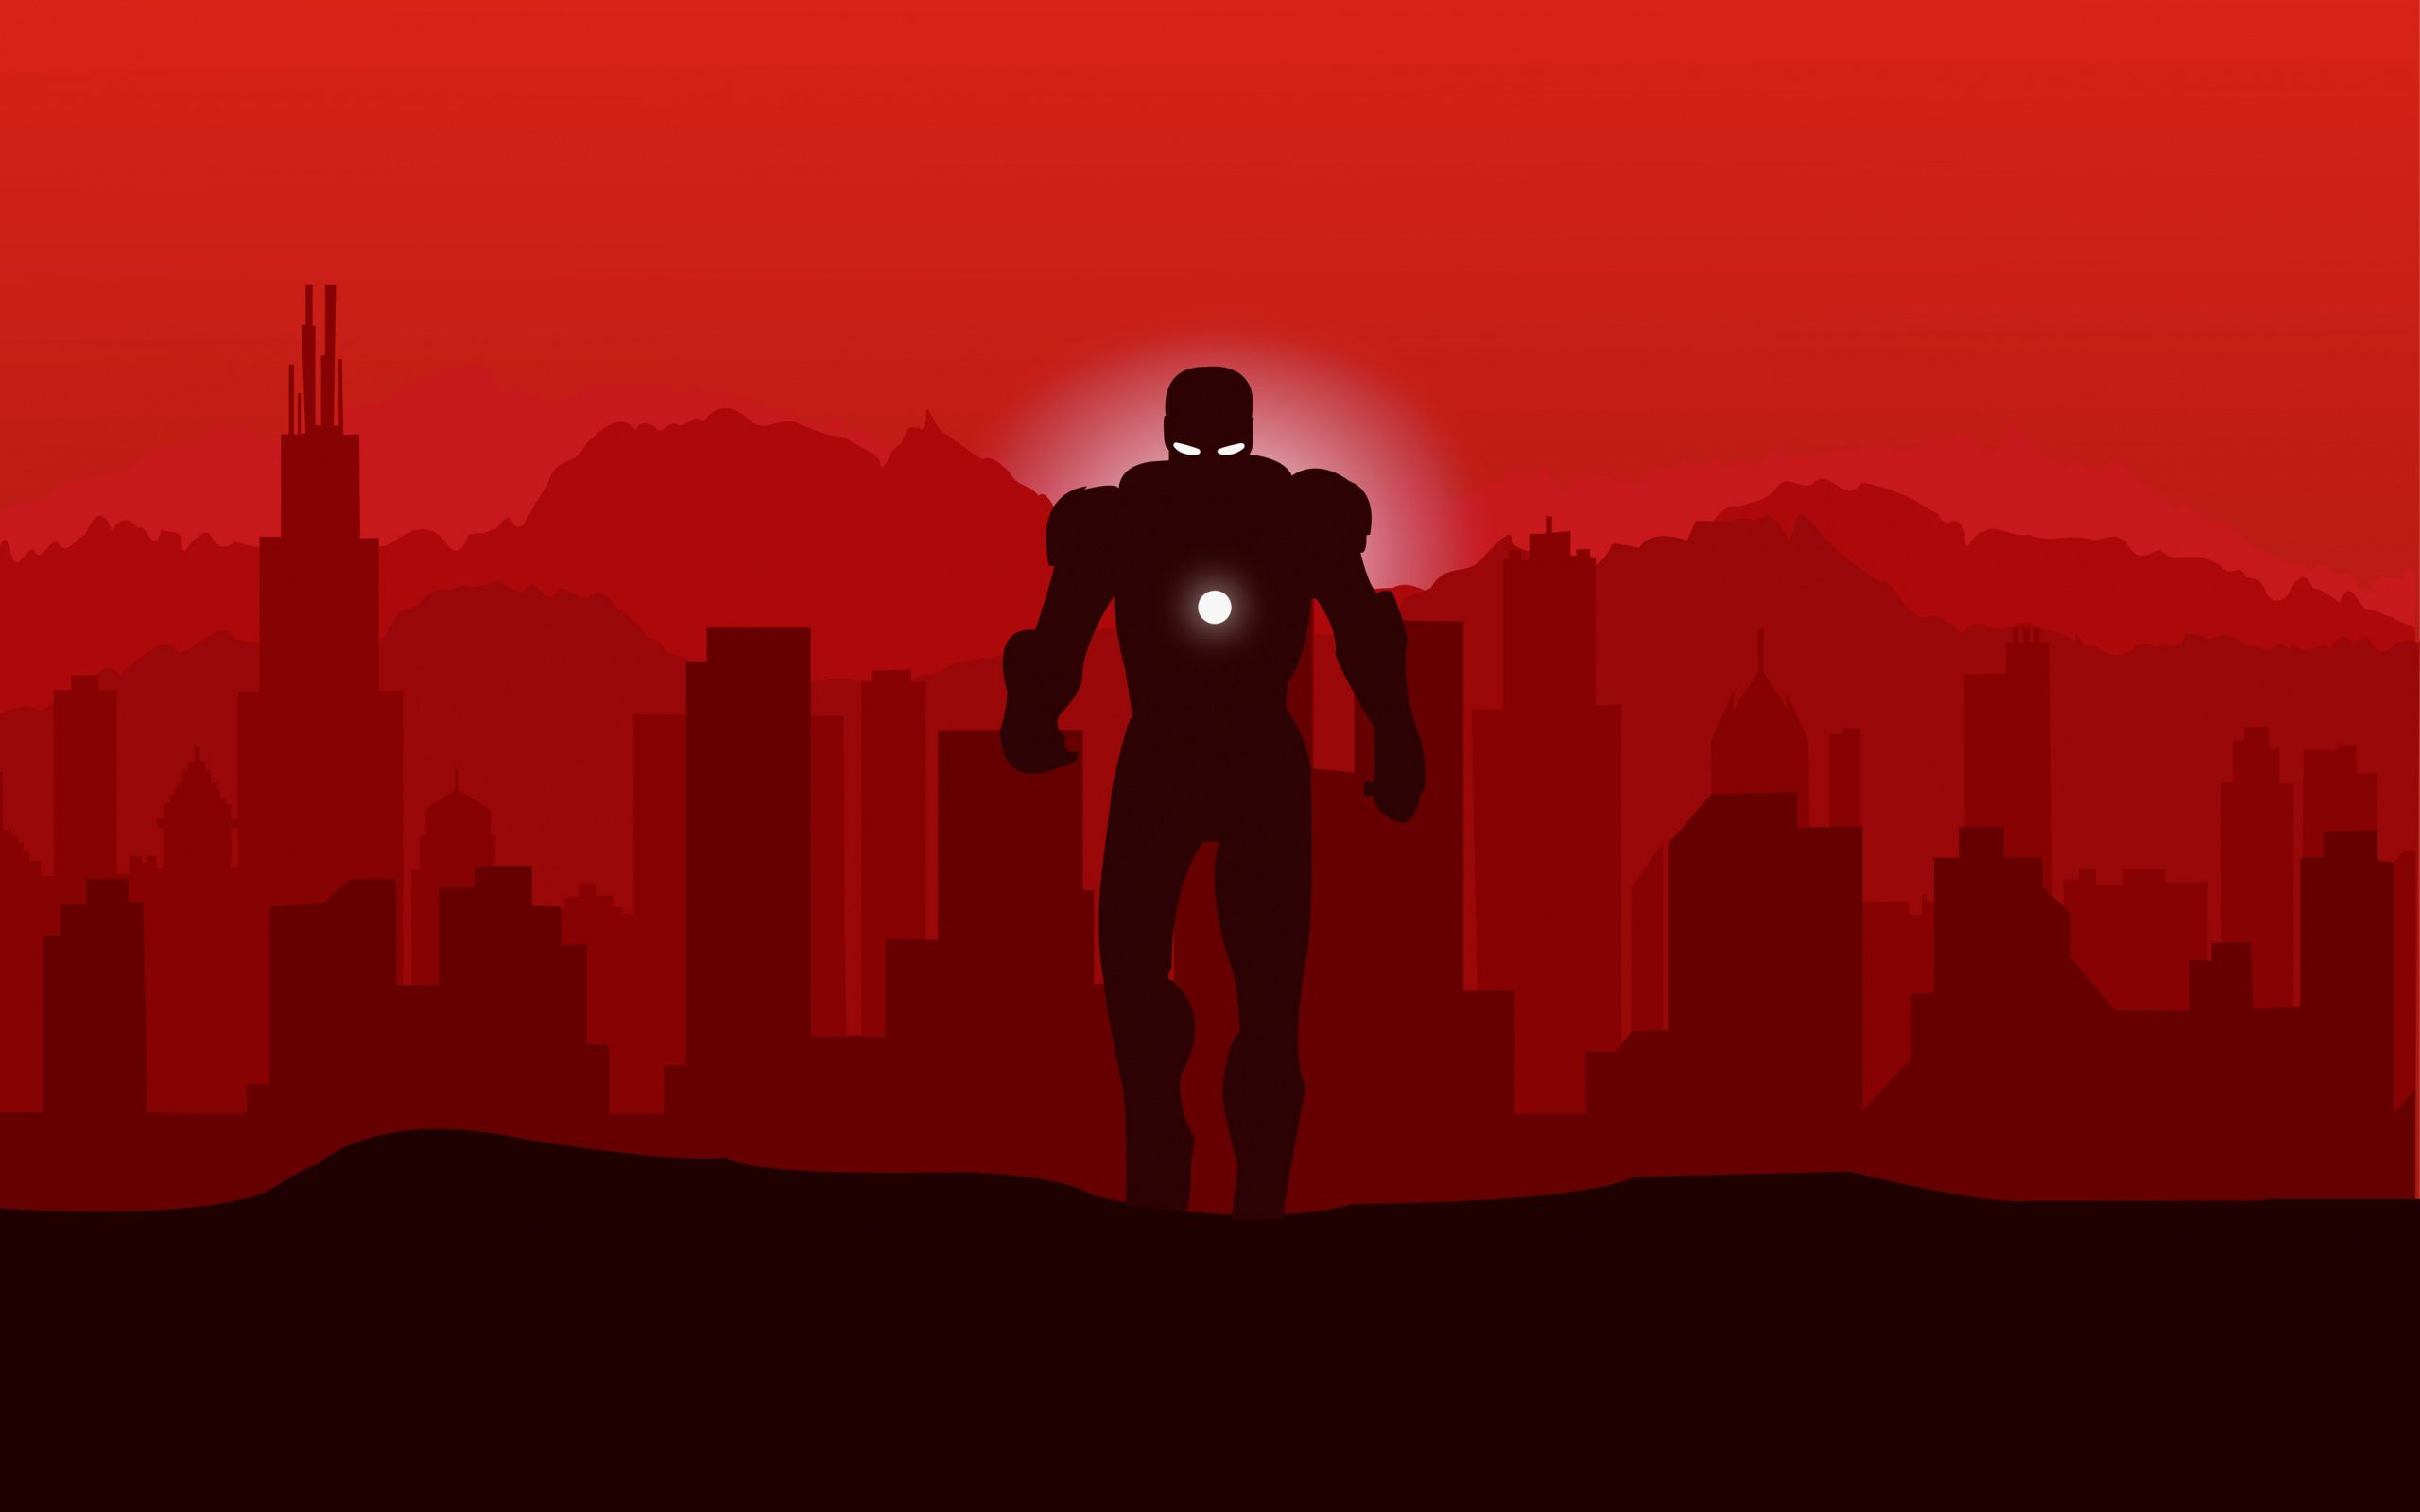 Download Marvel Heroes, Iron man, superhero, minimalist wallpaper, 2560x Dual Wide, Widescreen 16: Widescreen